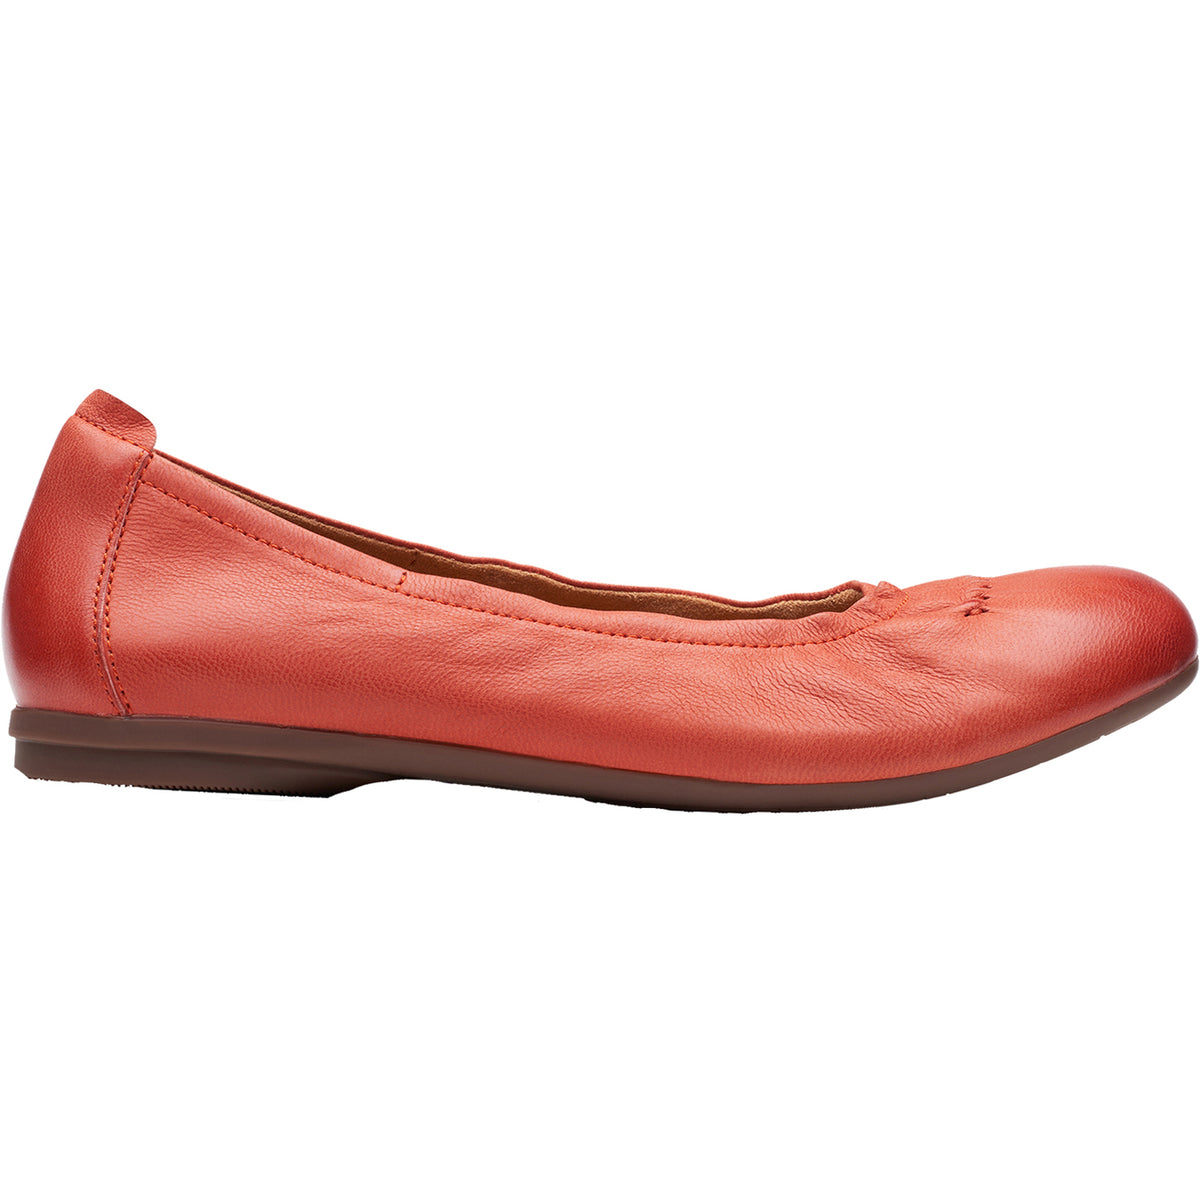 Clarks Rena Hop Grenadine | Women's Slip-On Flats | Footwear etc.